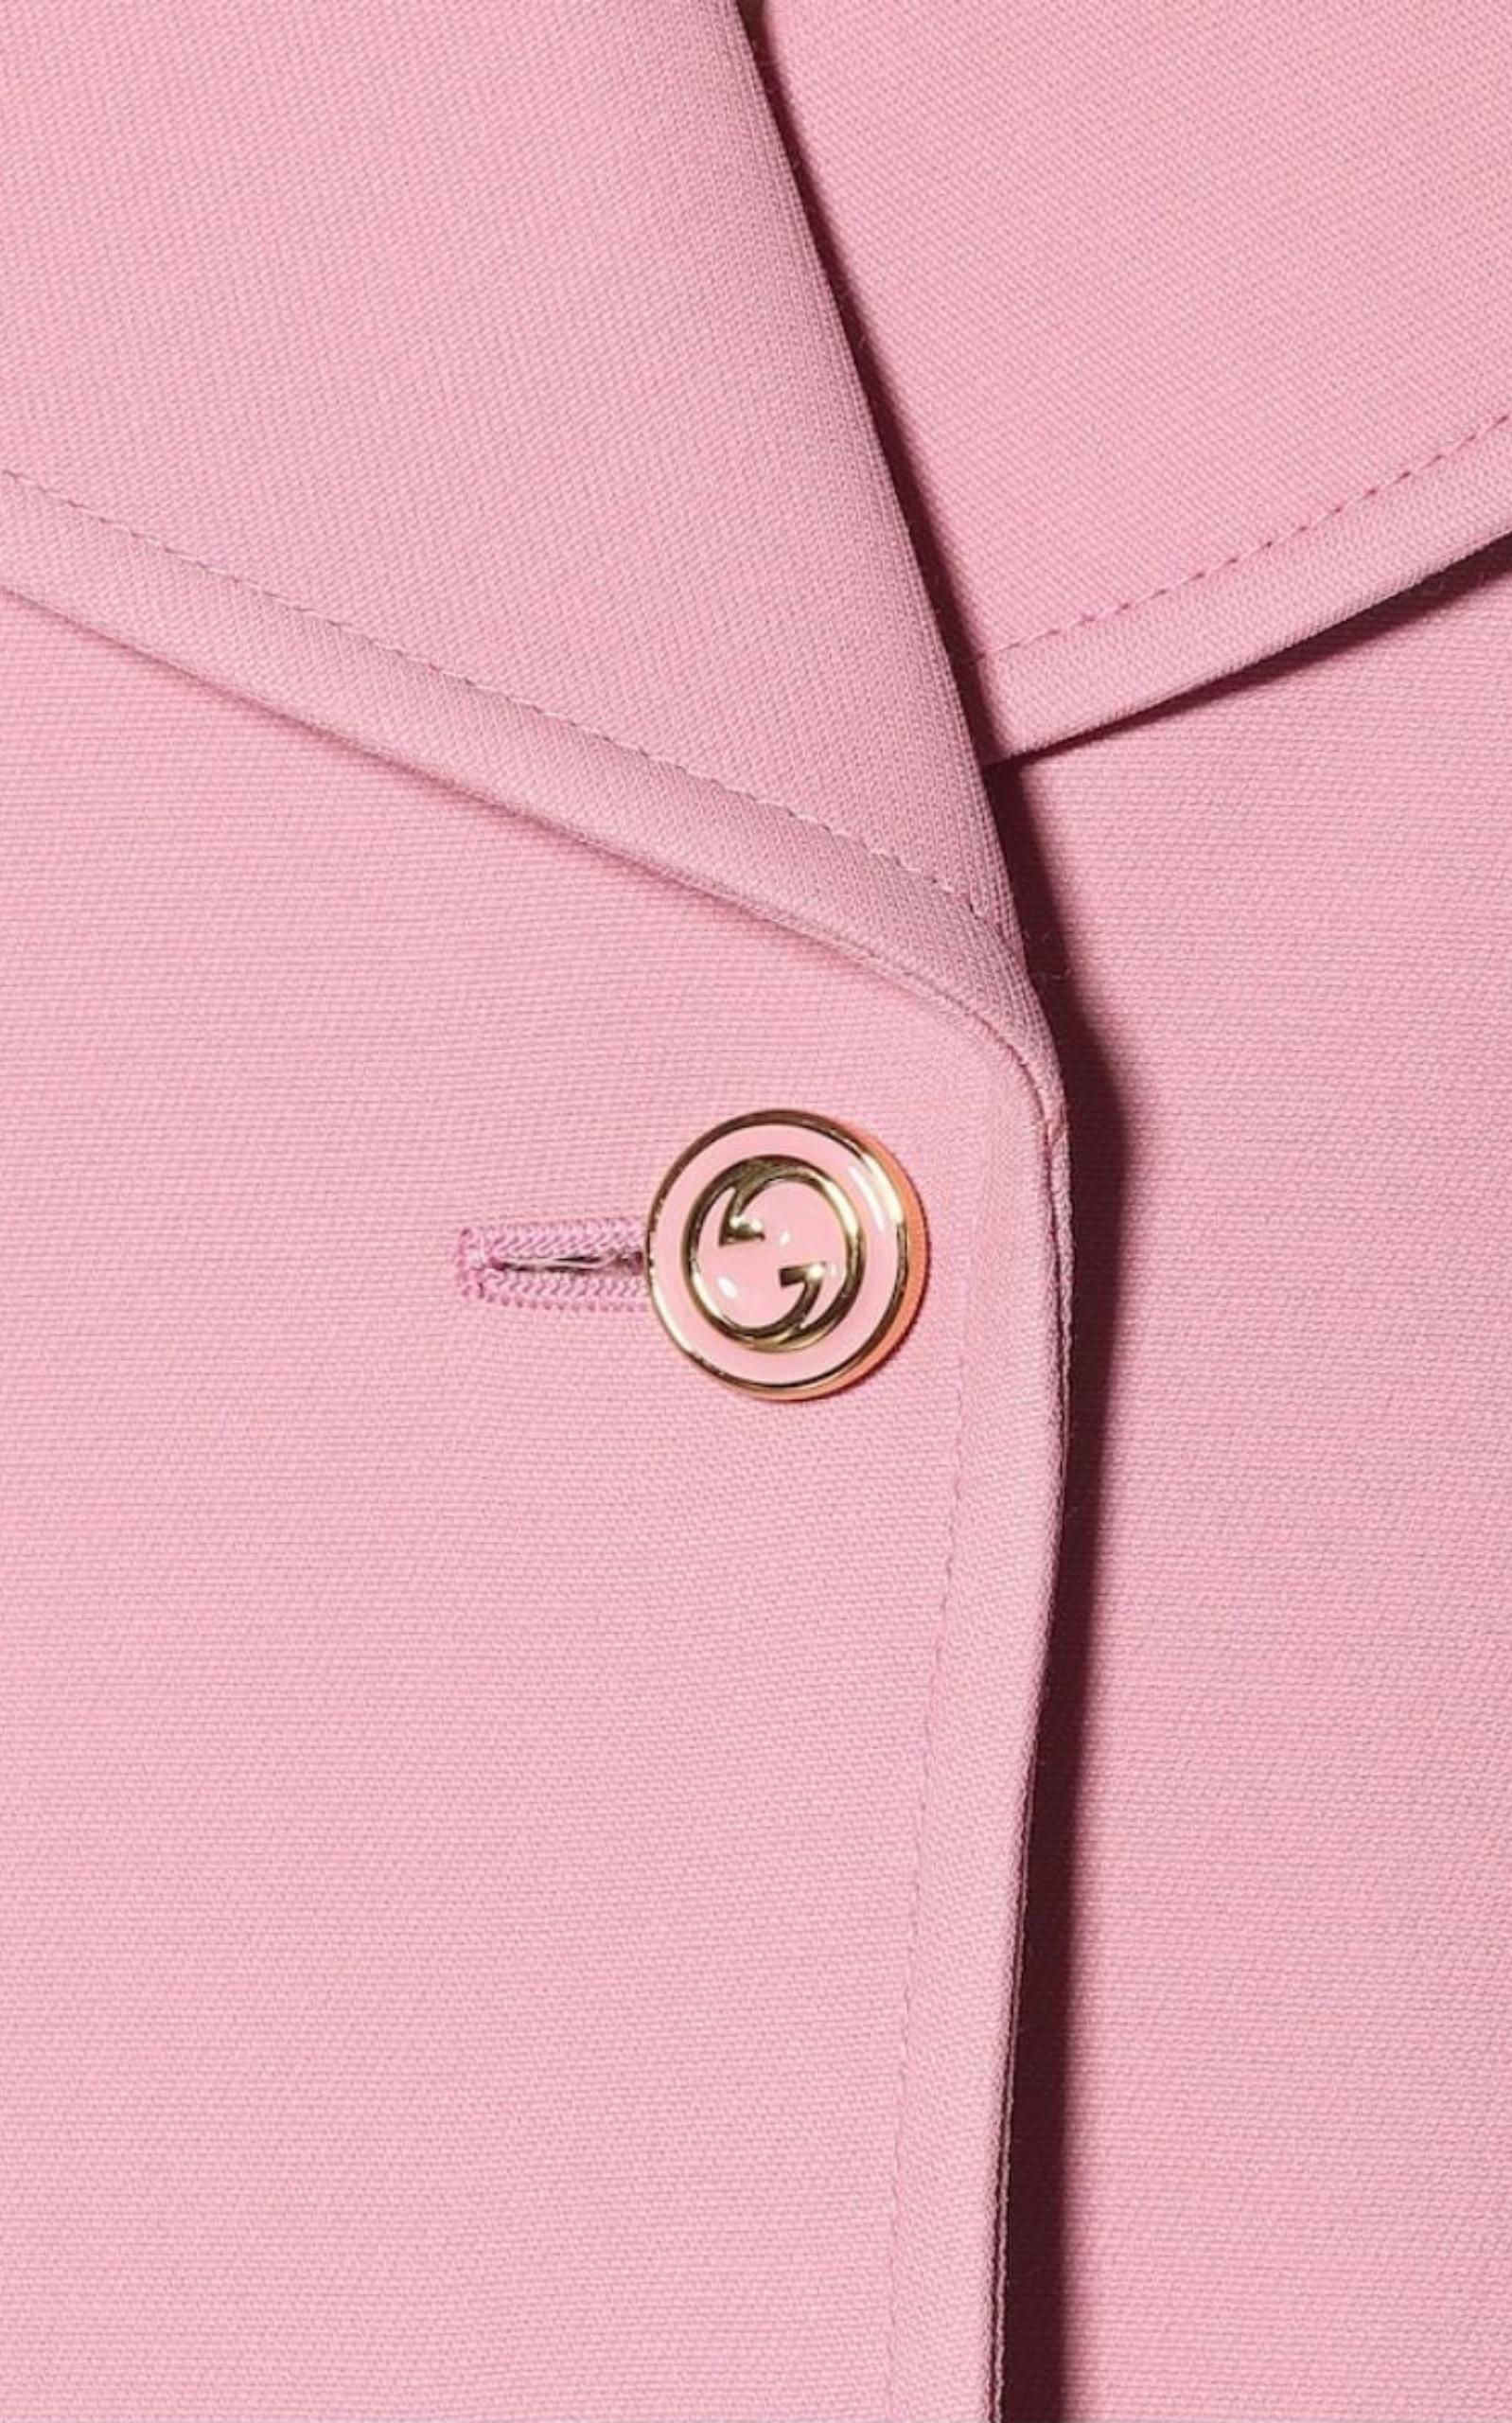 Gucci Double Breasted Wool Women's Monogram Lining Blazer Jacket Size US 8